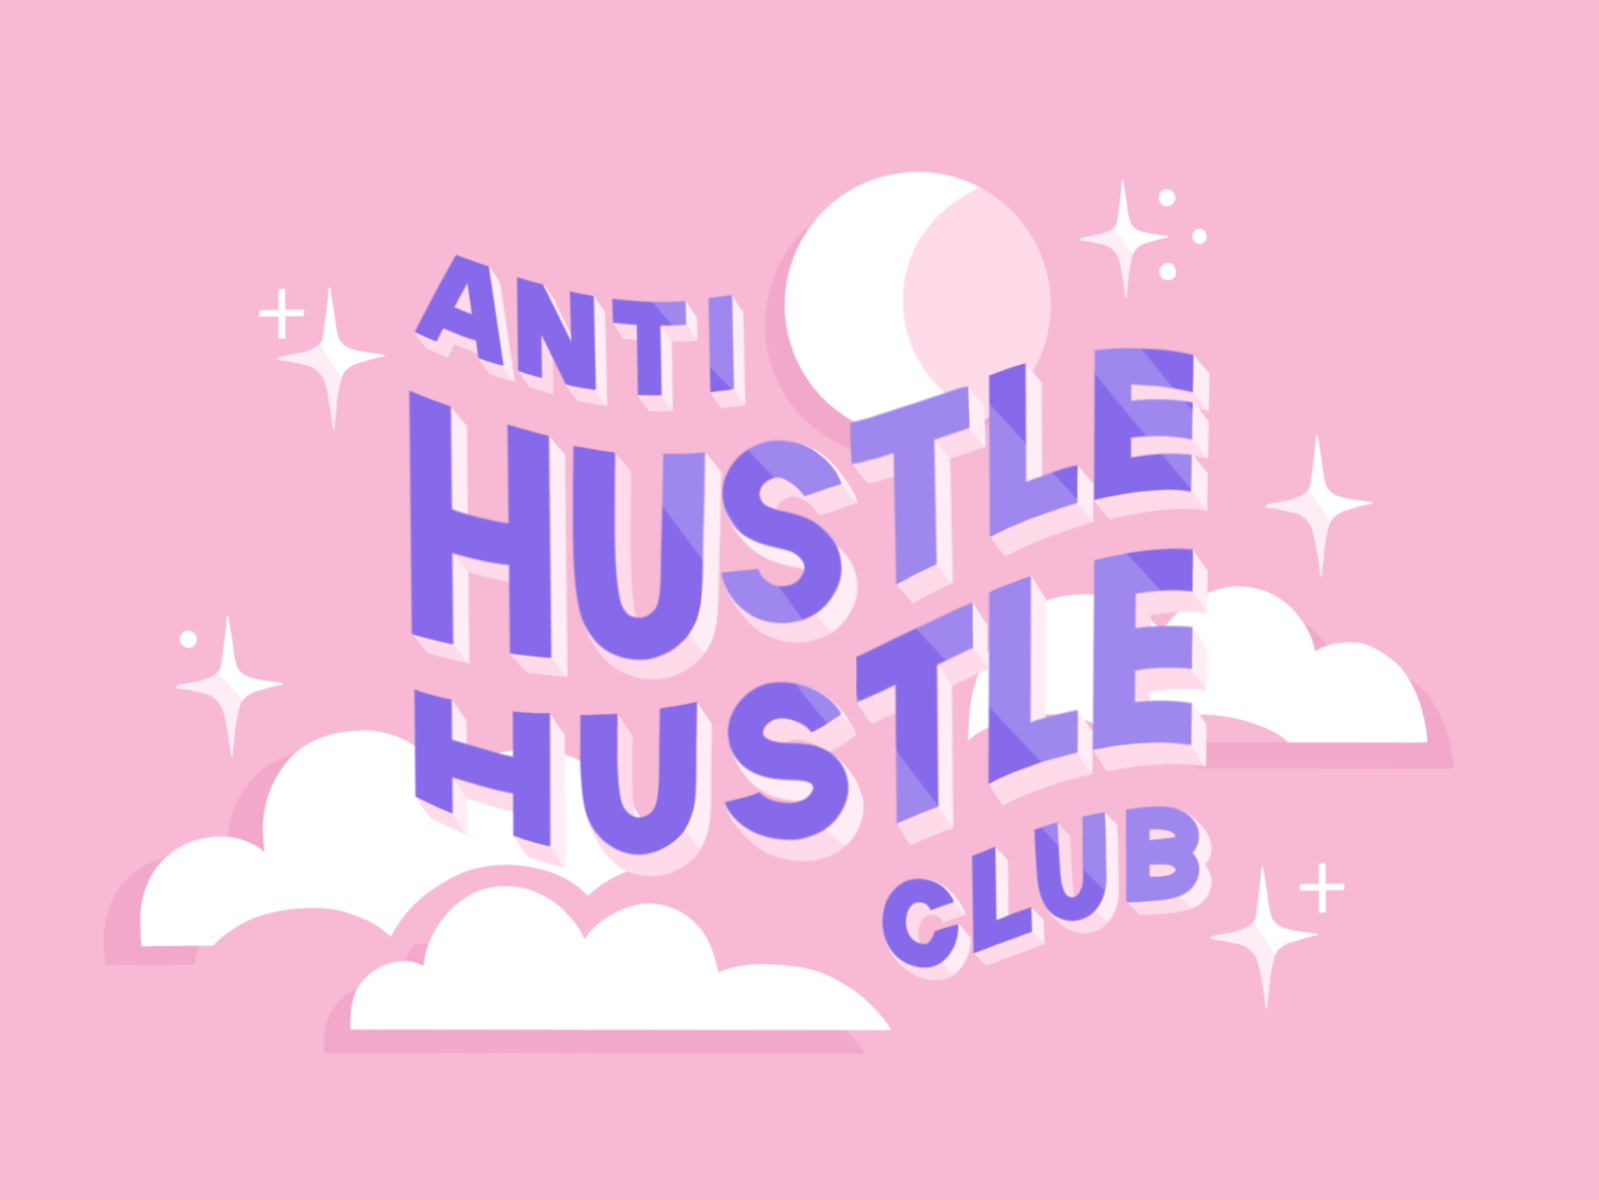 Anti Hustle Hustle Club | Lettering Illustration by Dana Chan on Dribbble